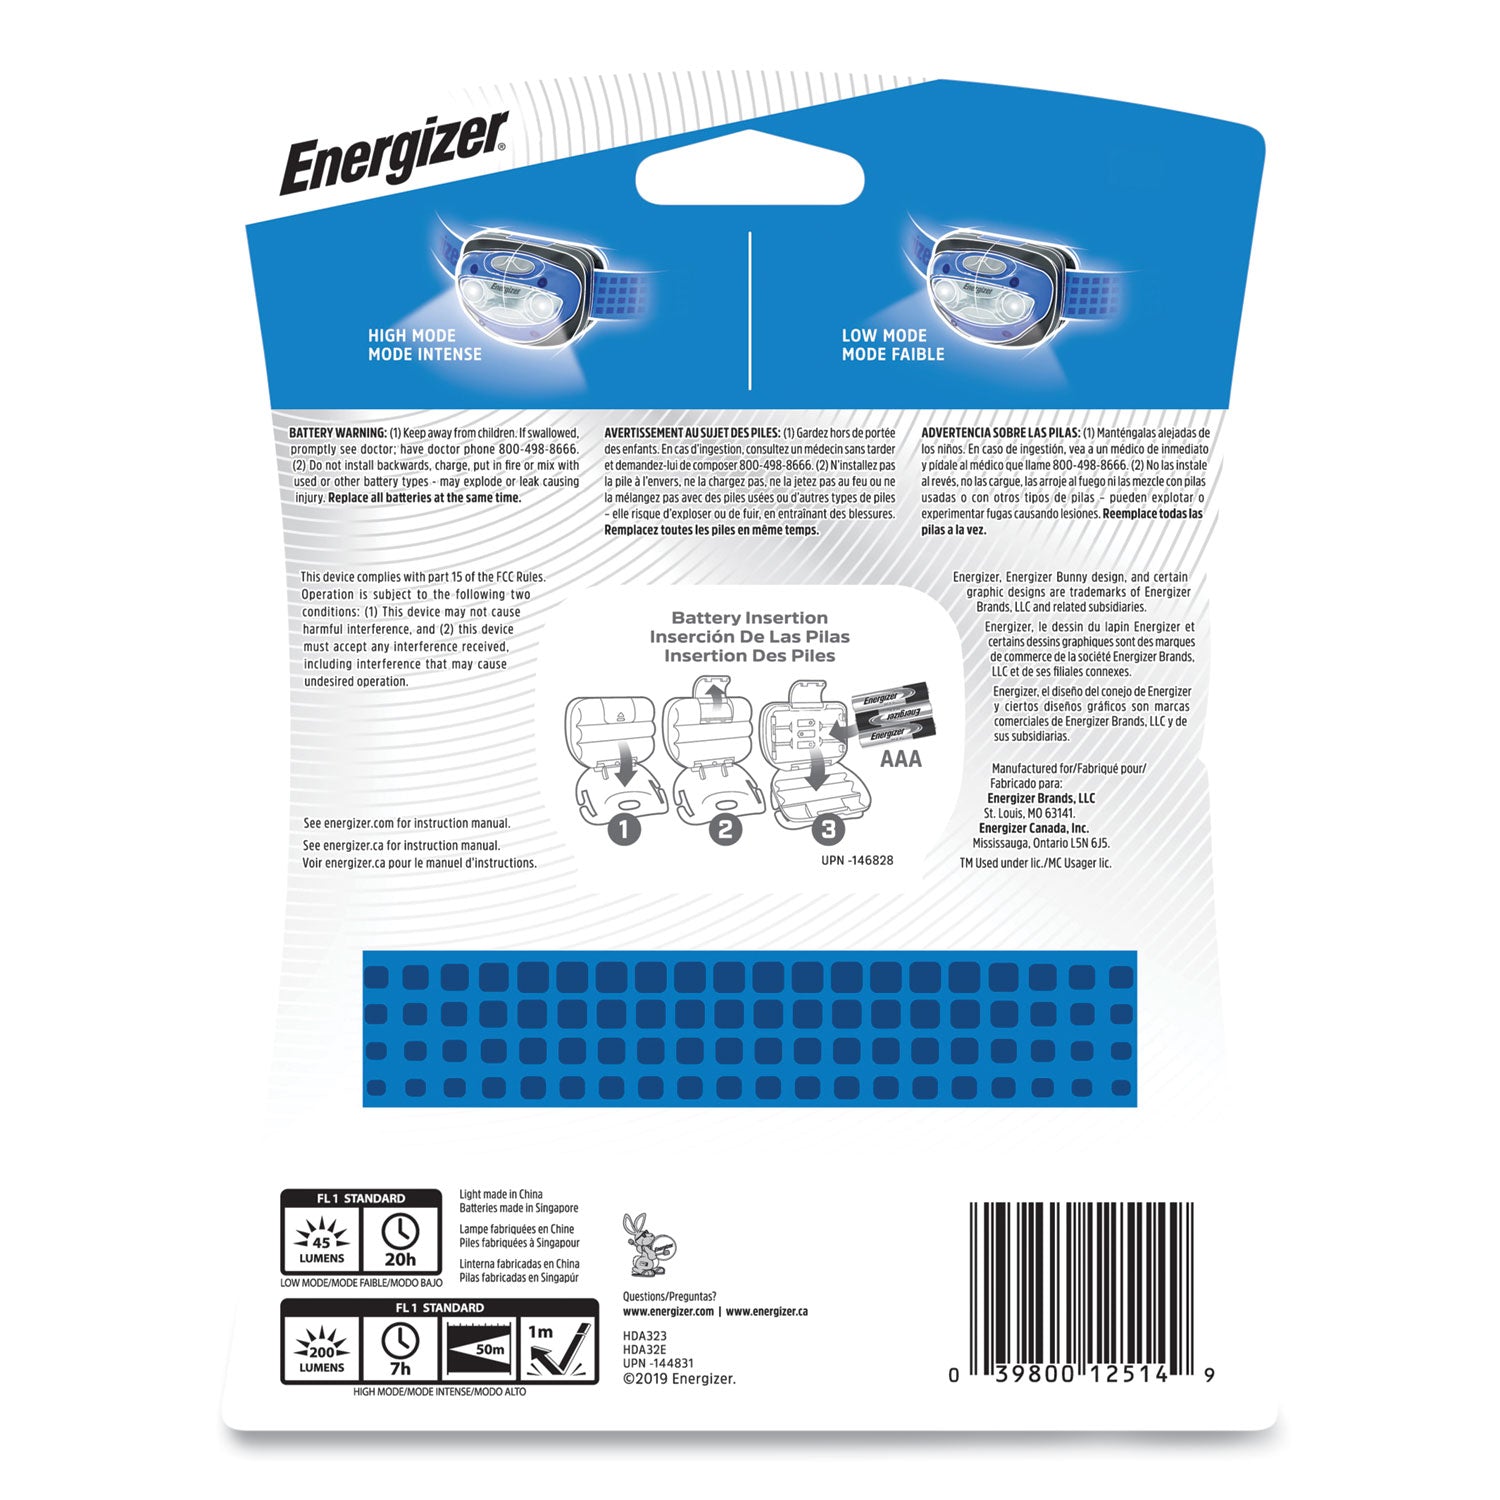 LED Headlight, 3 AAA Batteries (Included), Blue - 